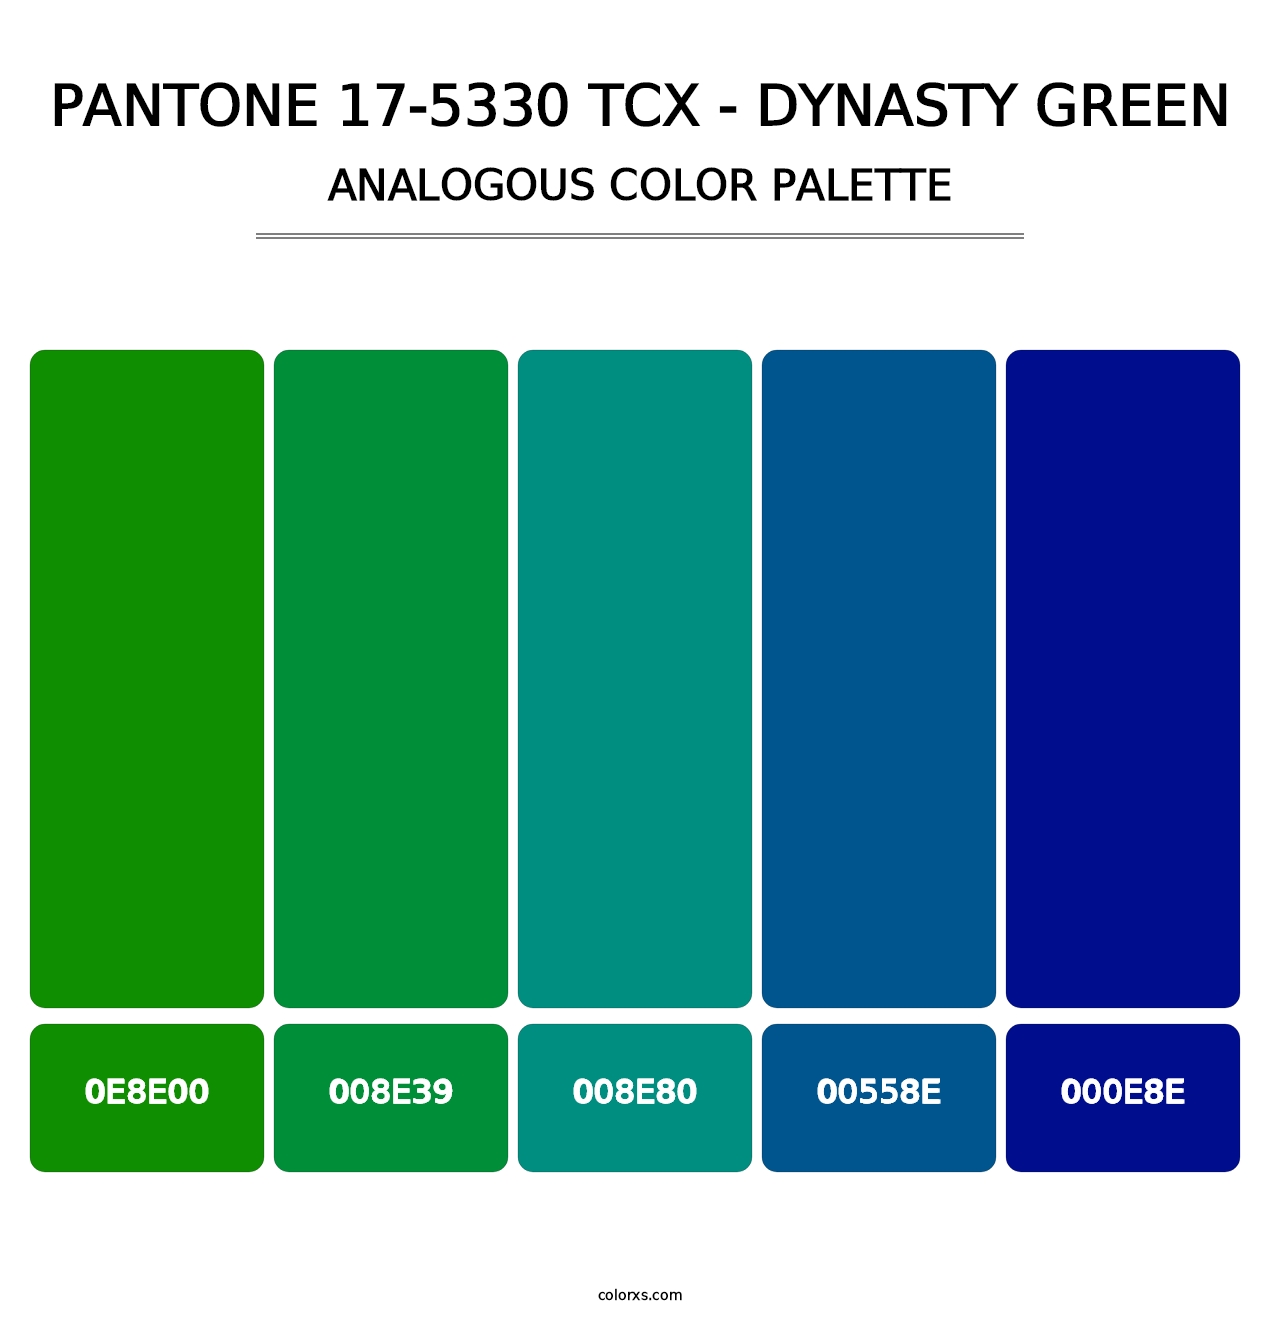 PANTONE 17-5330 TCX - Dynasty Green - Analogous Color Palette